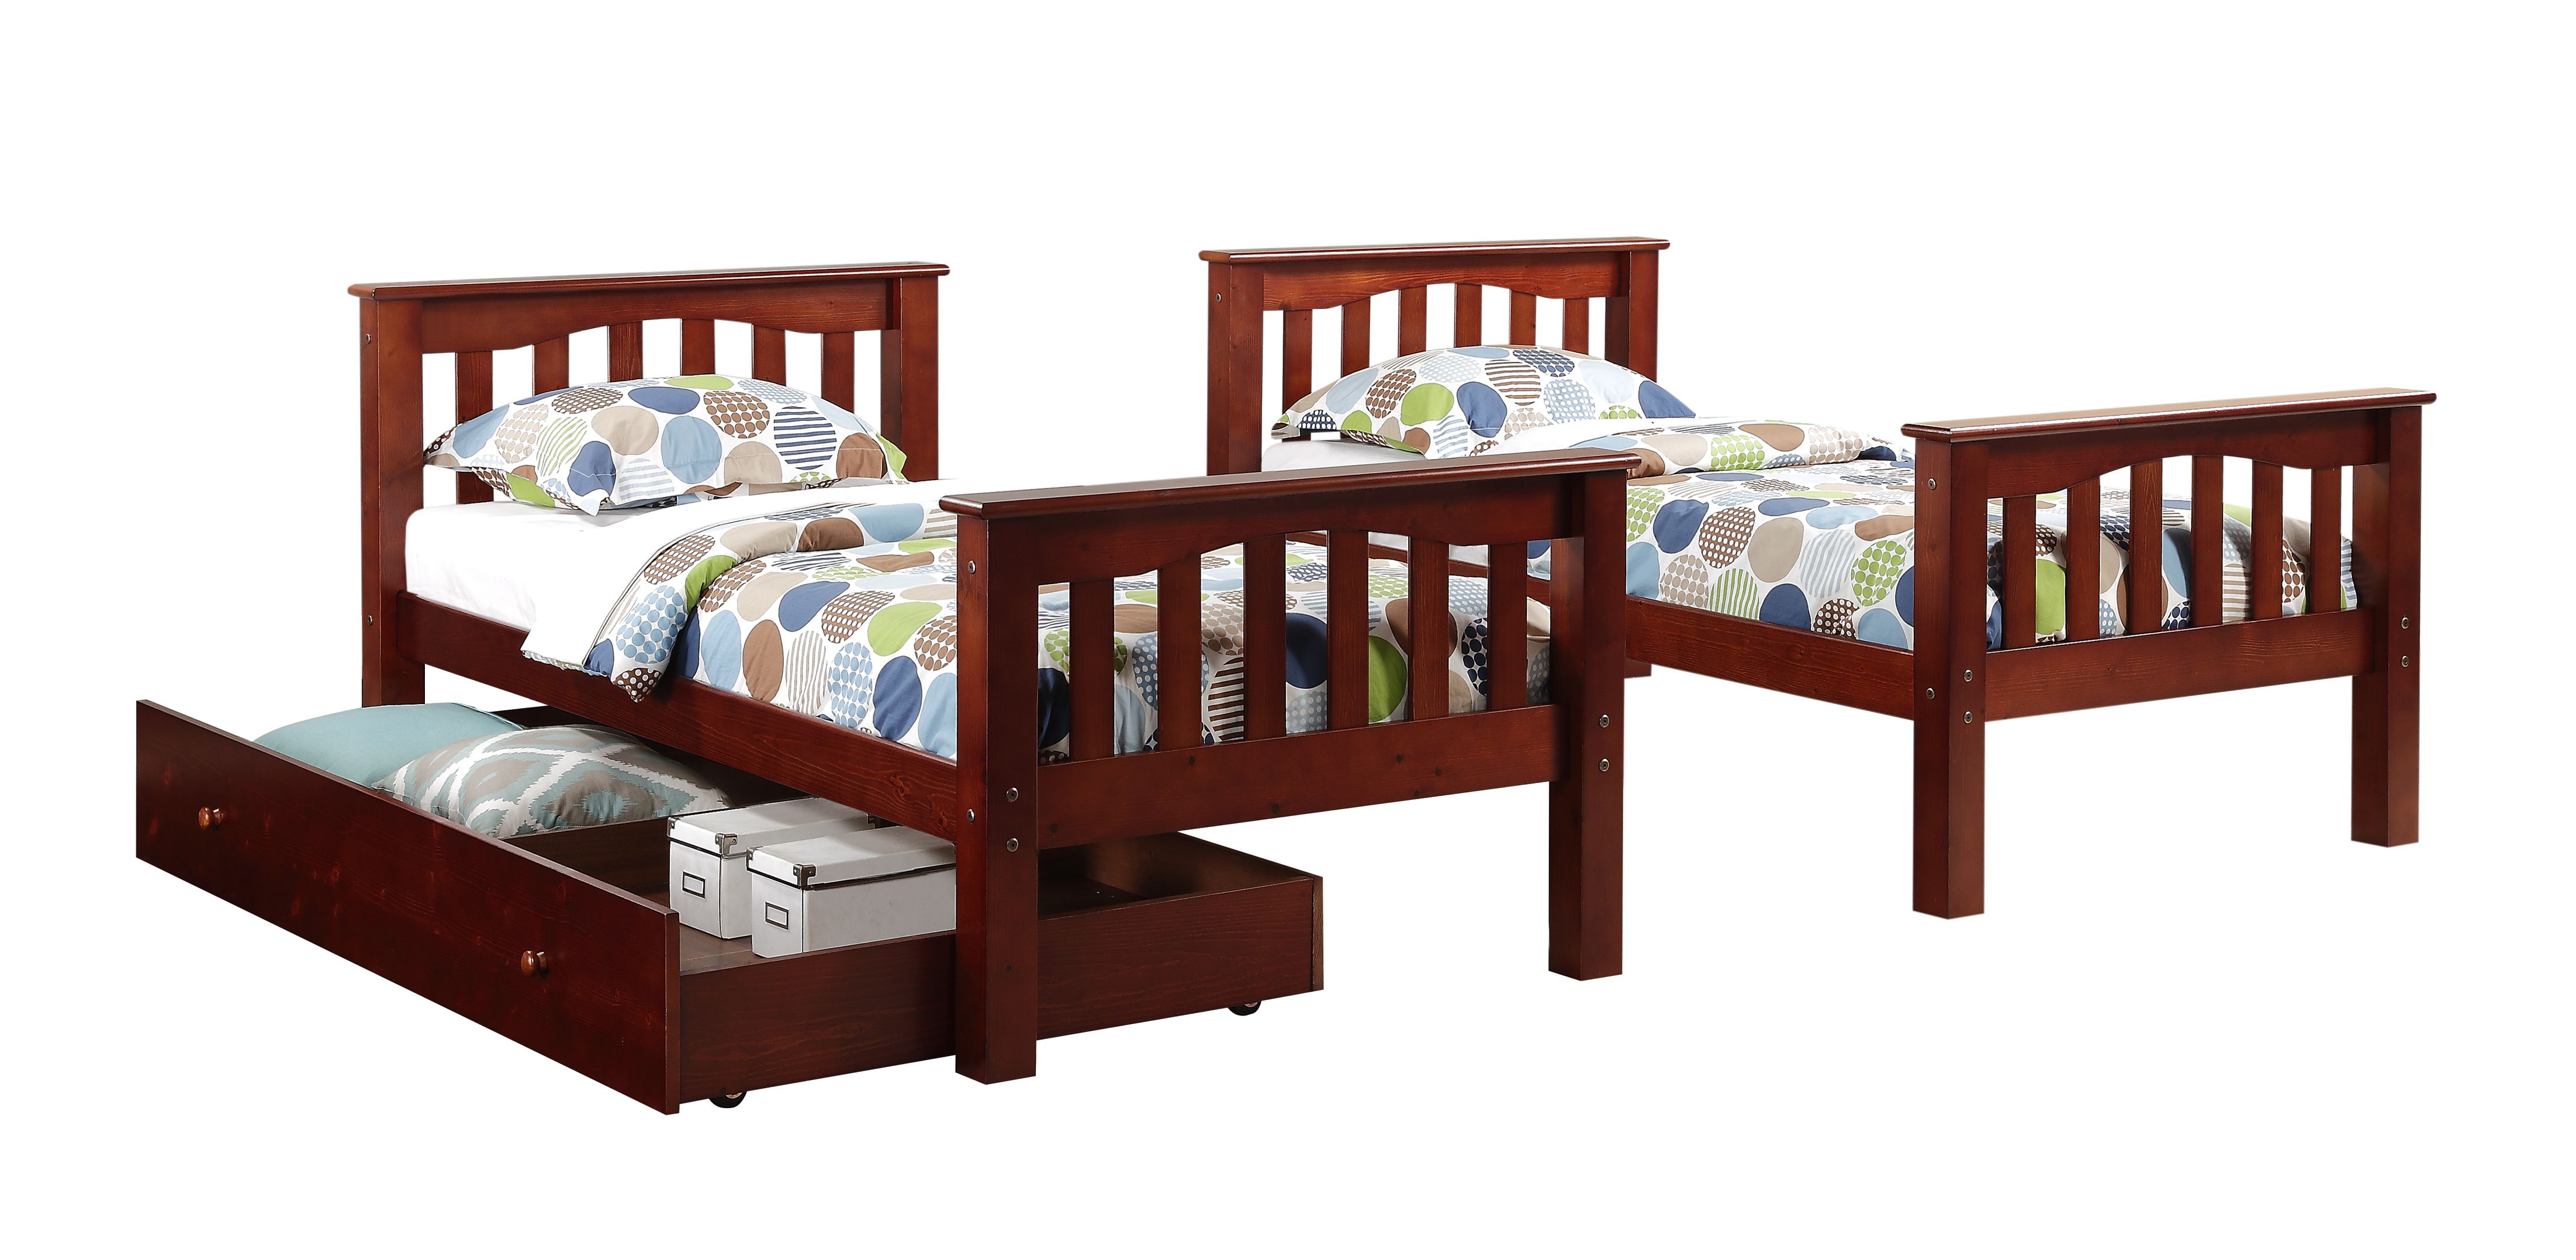 Berkley Jensen Twin Size Bunk Bed With, Berkley Jensen Stairway Bunk Bed With Trundle Drawer